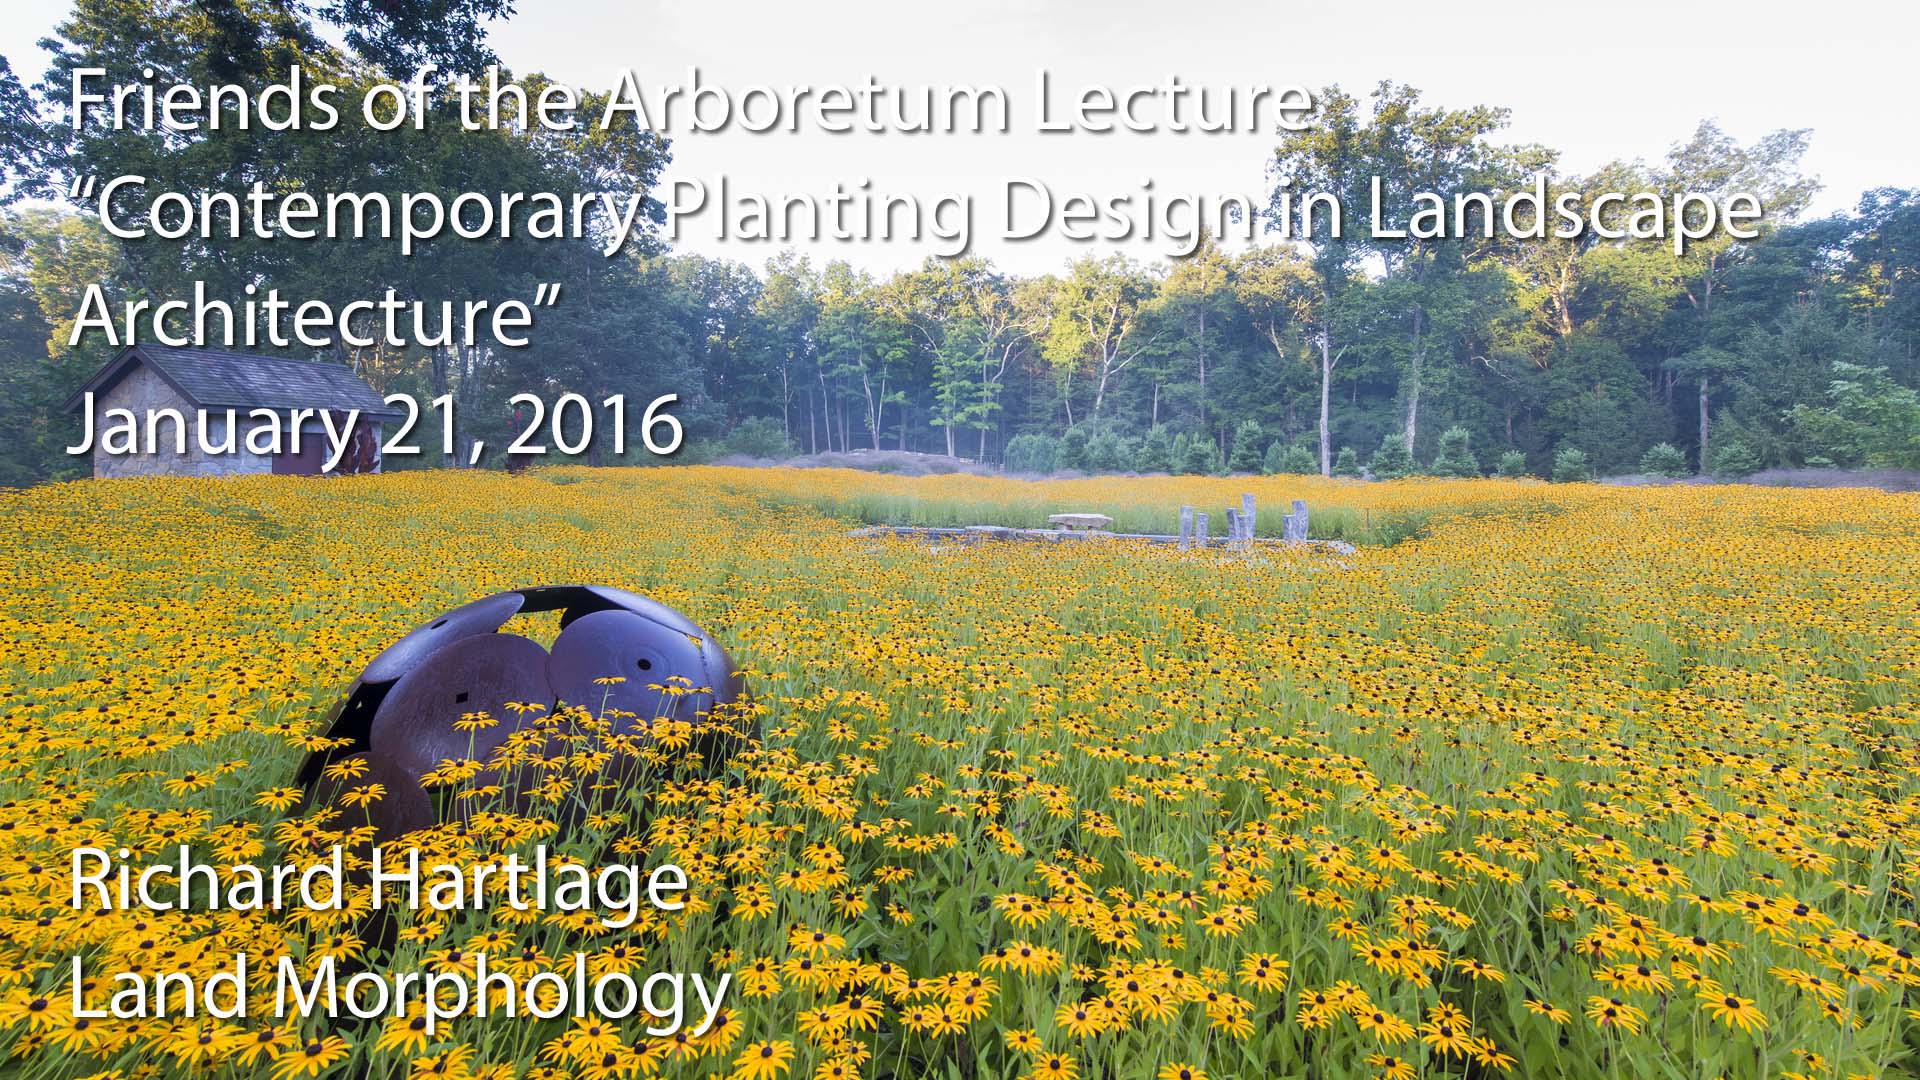 Friends of the Arboretum Lecture - Richard Hartlage - _Contemporary Planting Design in Landscape Architecture_